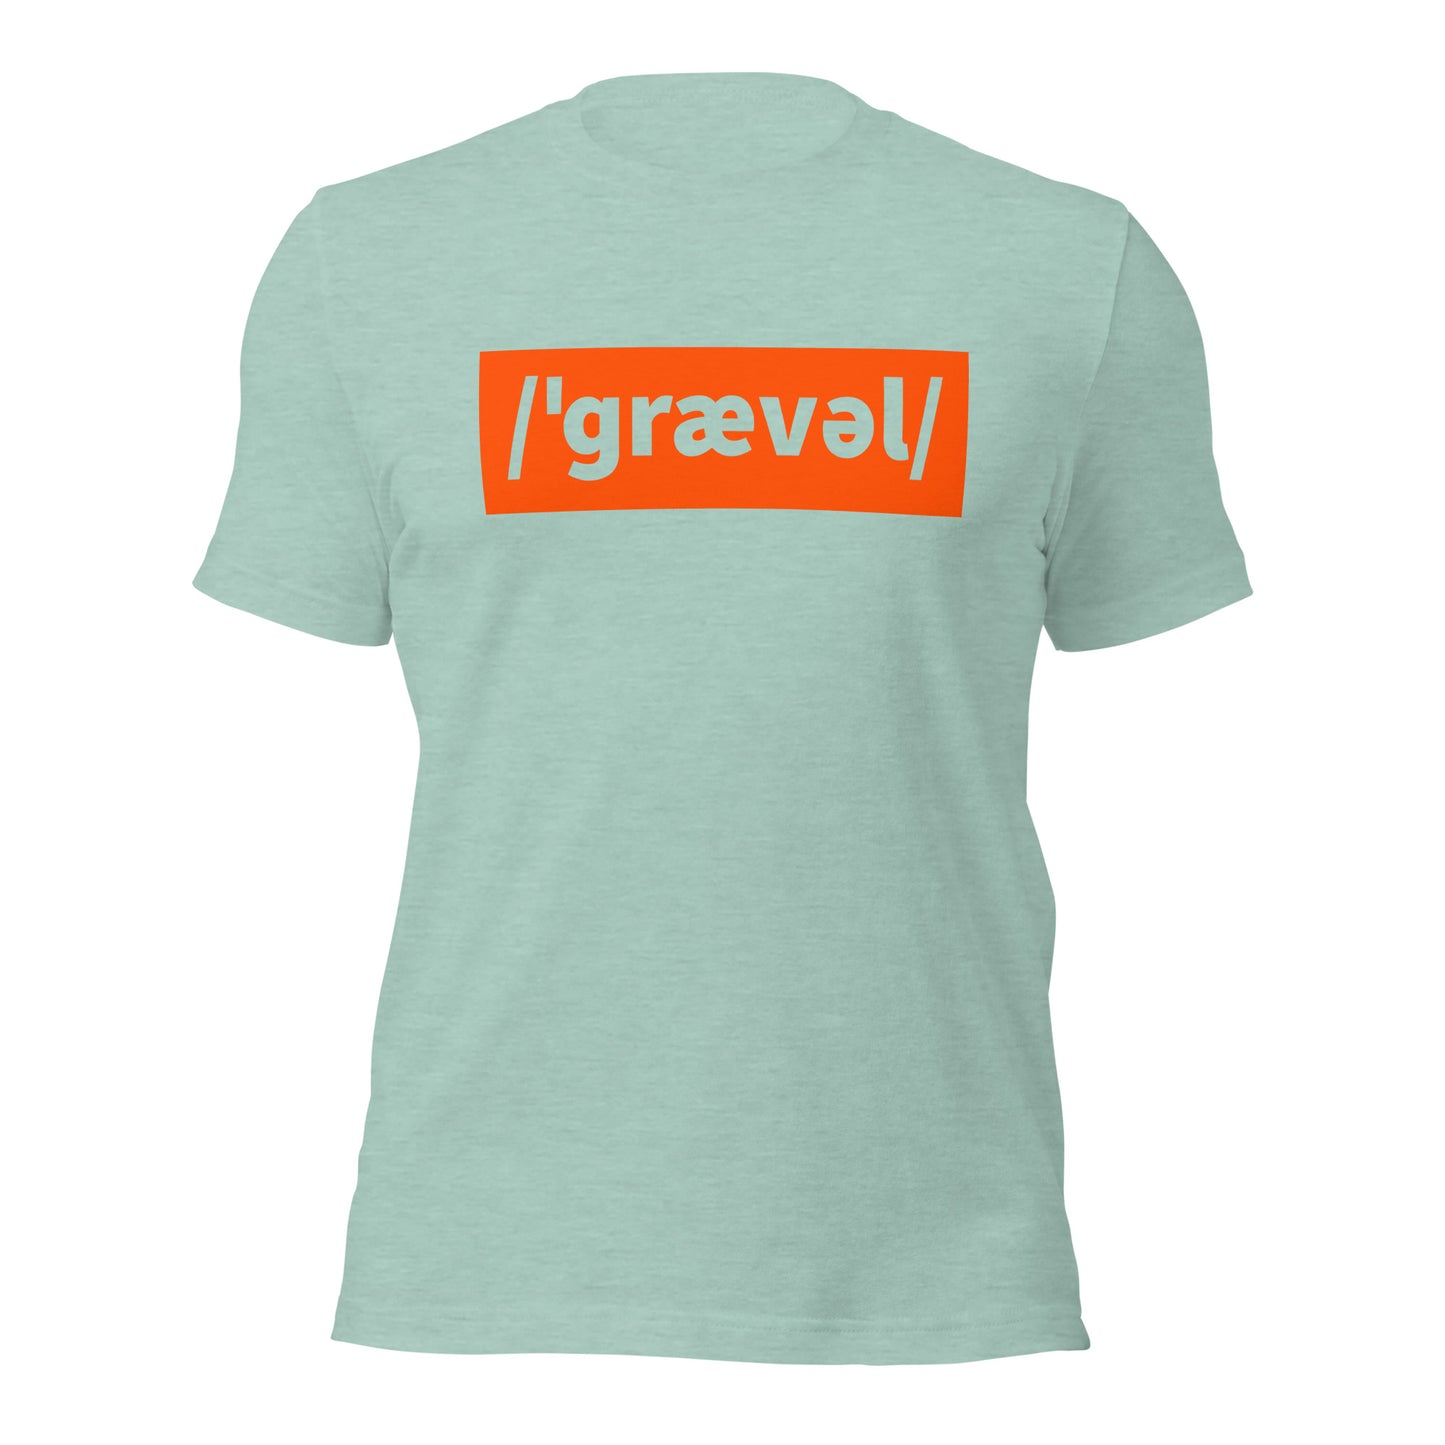 Gravel Bike T-Shirt, Adult Cyclist, Phonetic Spelling